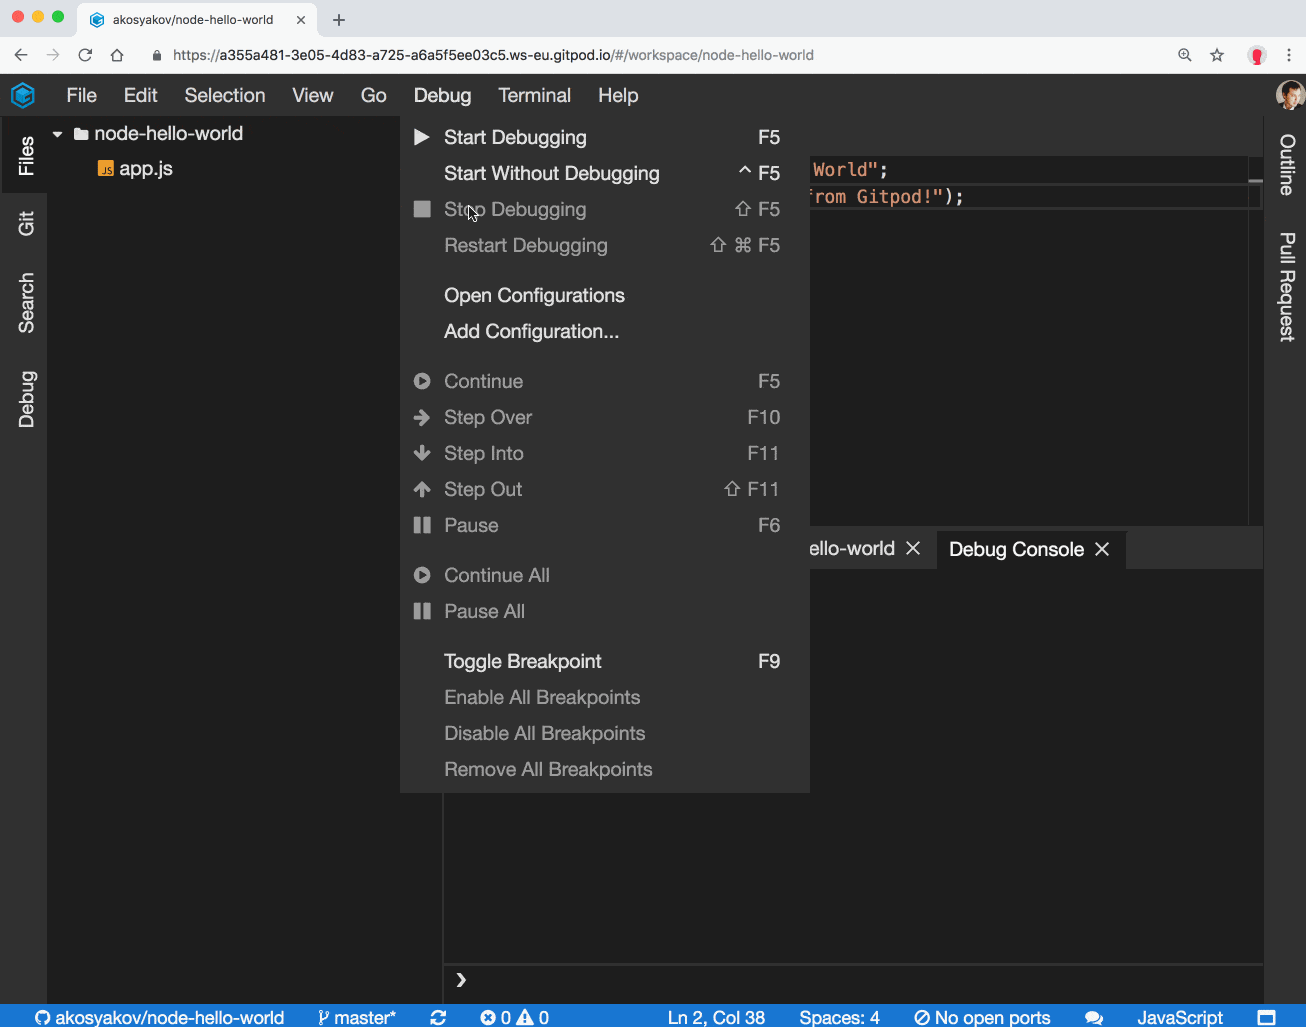 How to debug a Node.js application in Gitpod